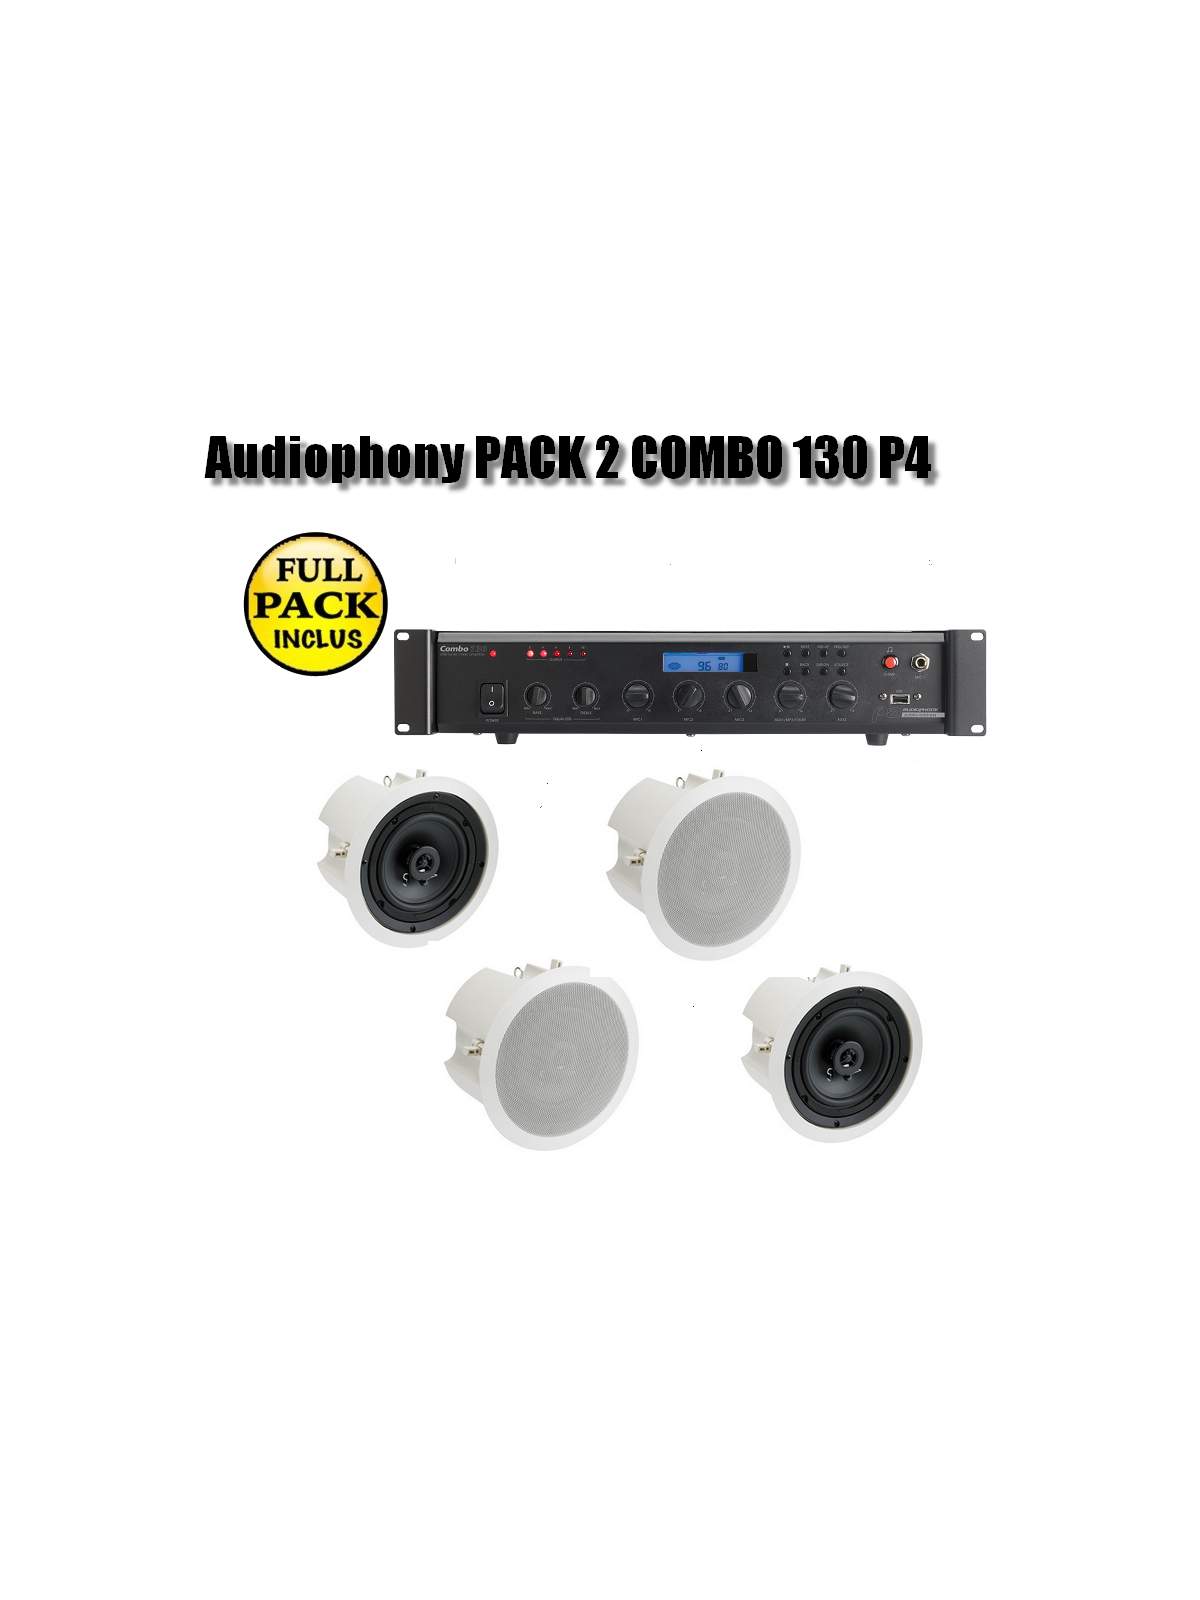 Audiophony PACK 2 COMBO 130 P4